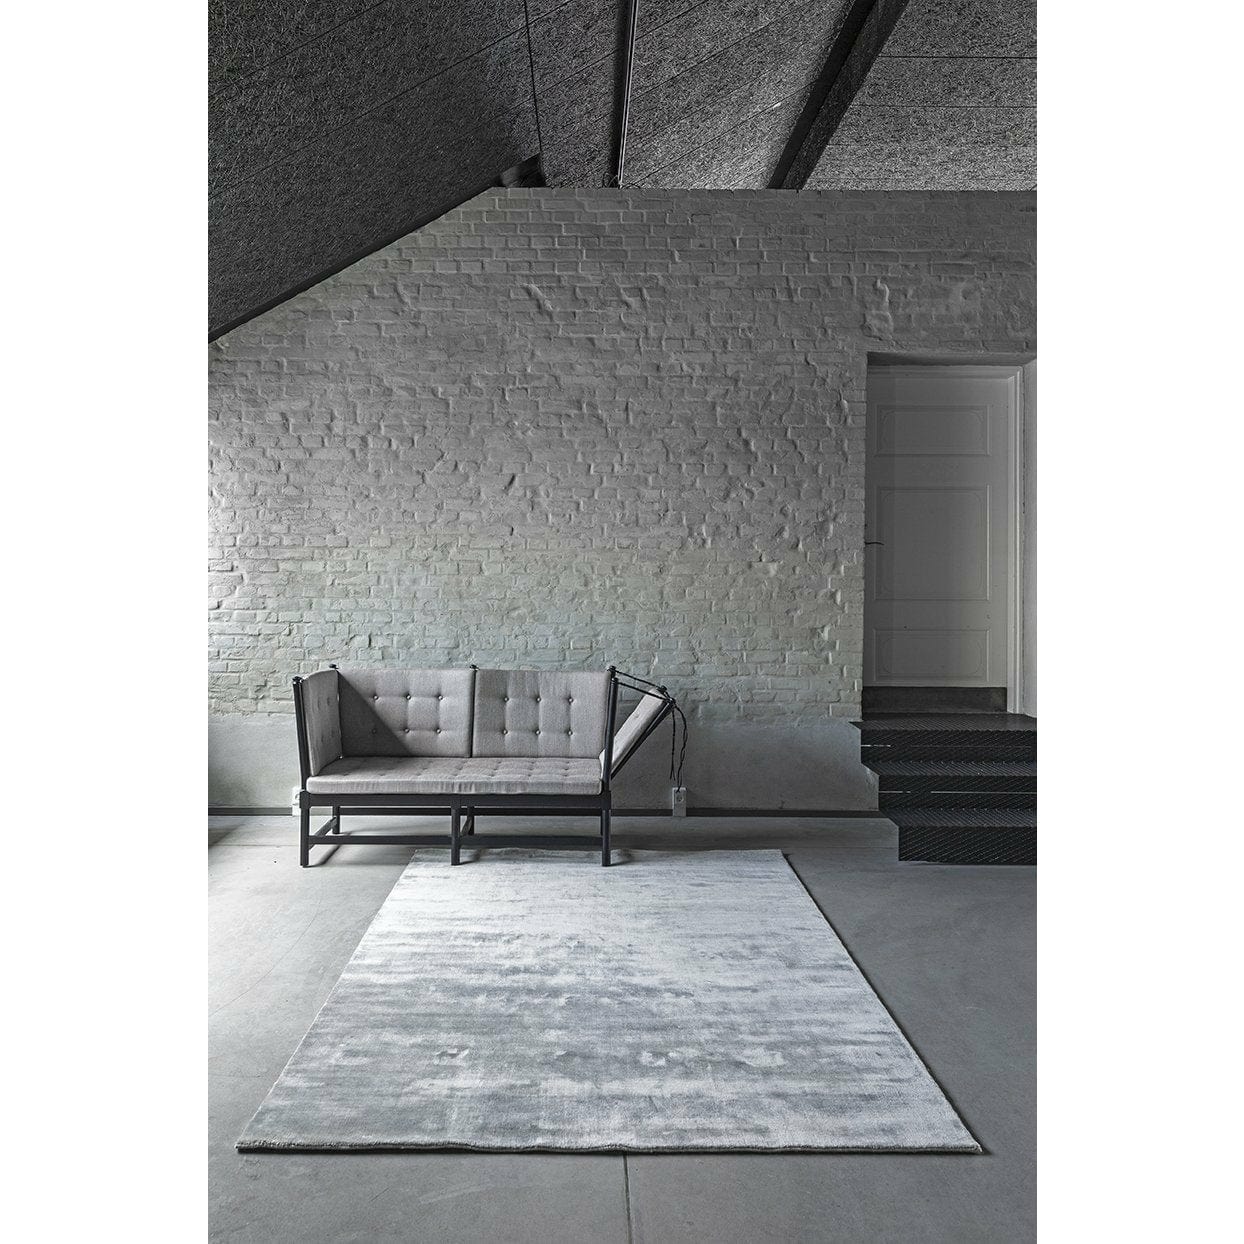 Massimo Earth Bamboo Rug Concrete Grey, 170x240 Cm